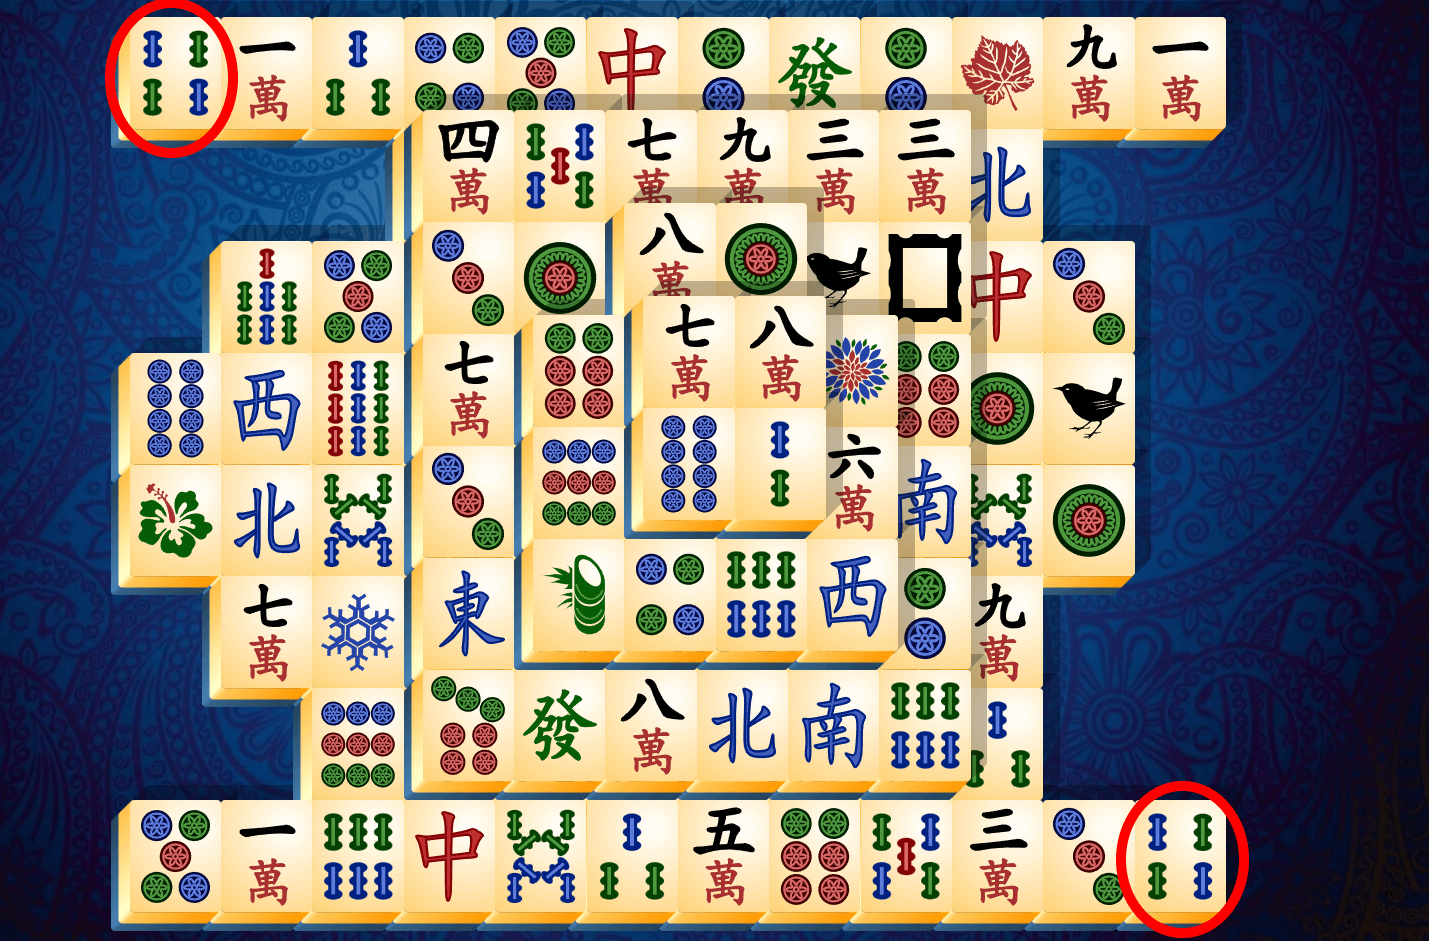 Tutorial de Mahjong Solitario, paso 5